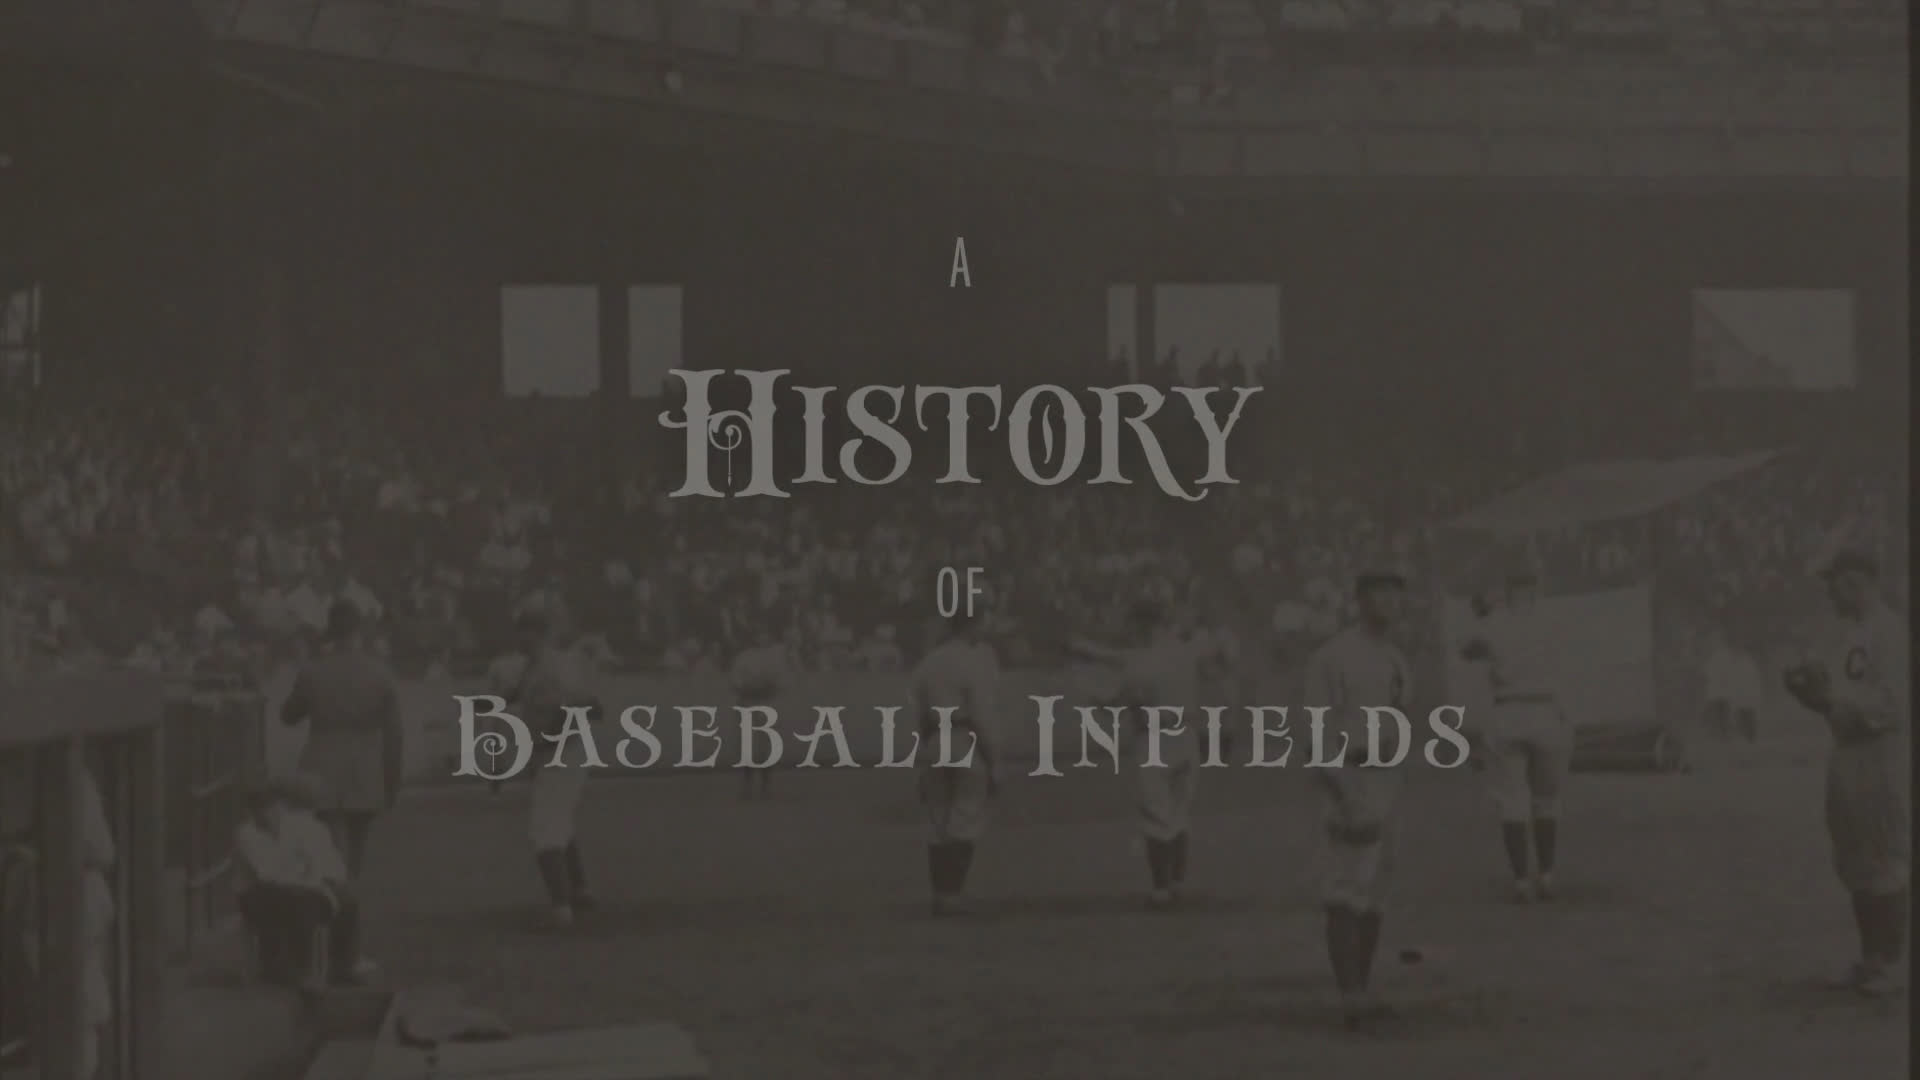 History of baseball infields